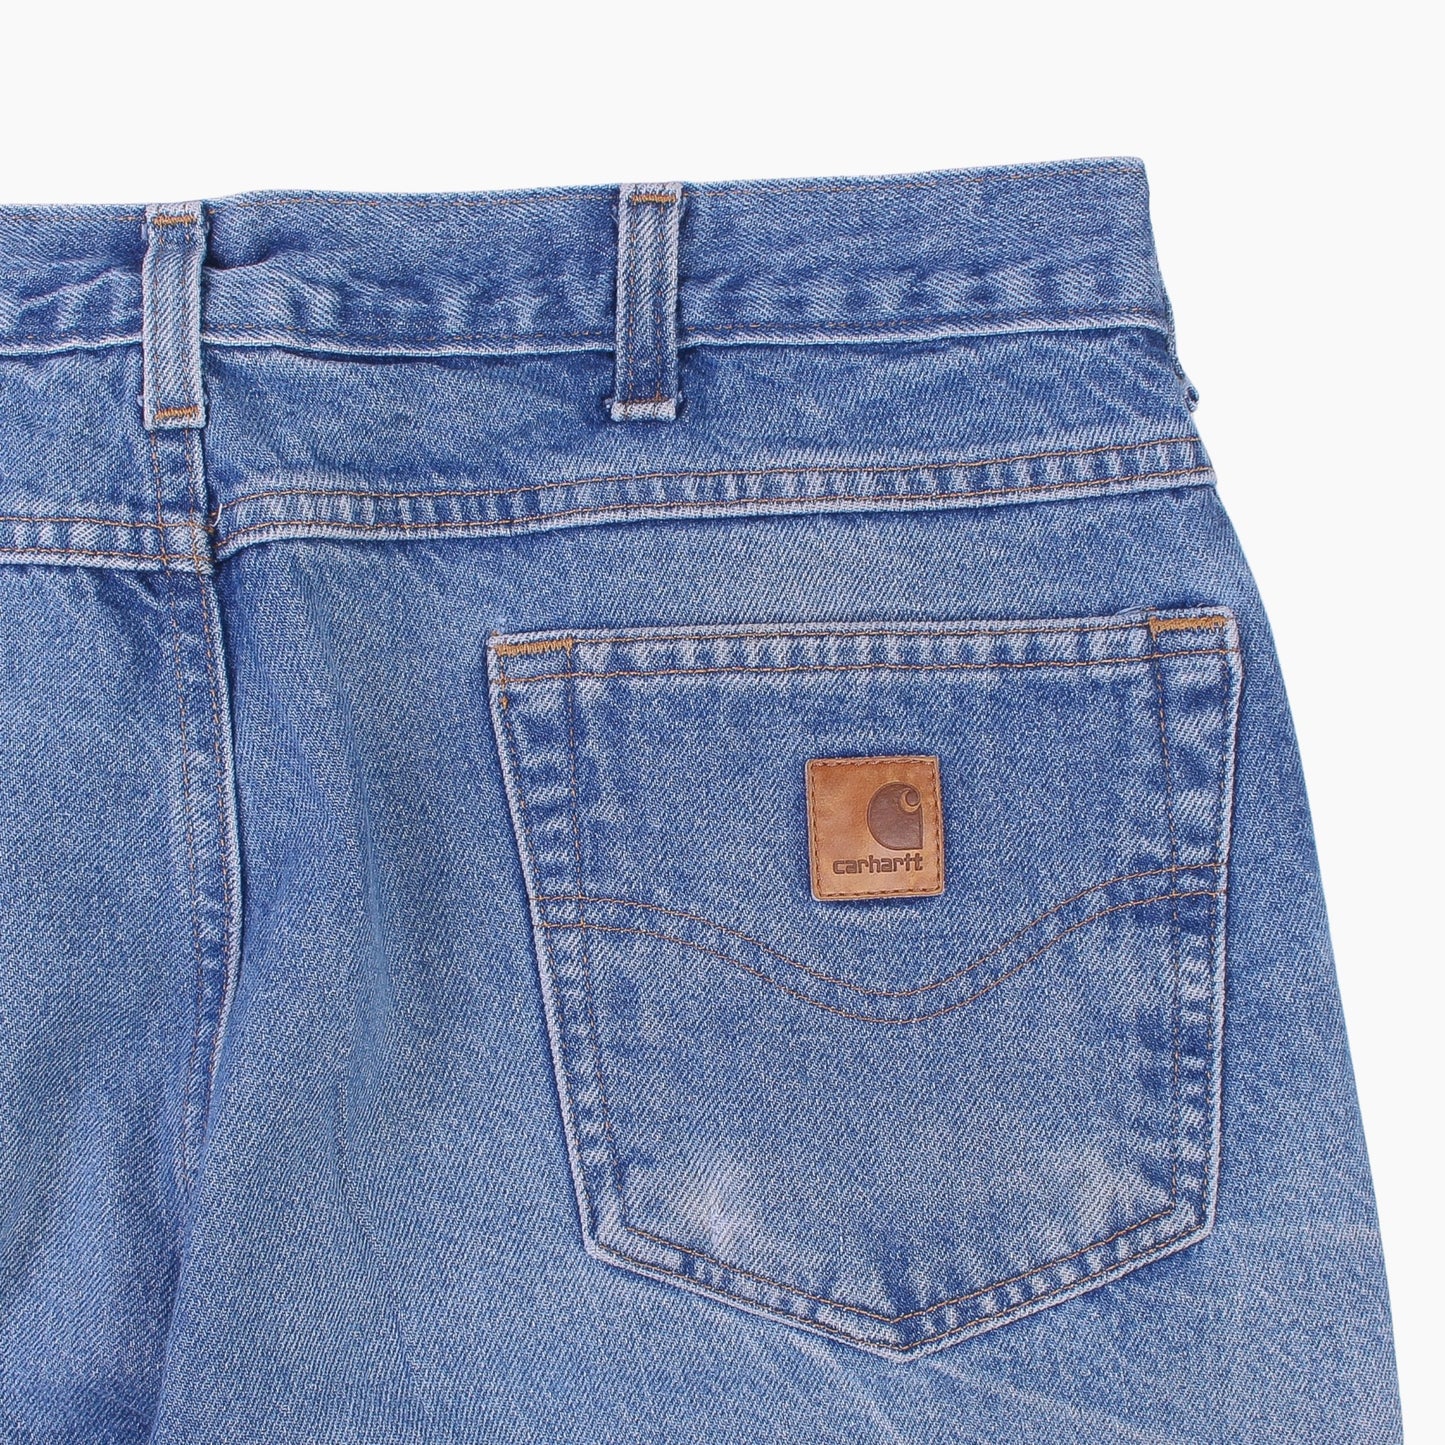 Vintage Pants - Denim - 36/32 - American Madness